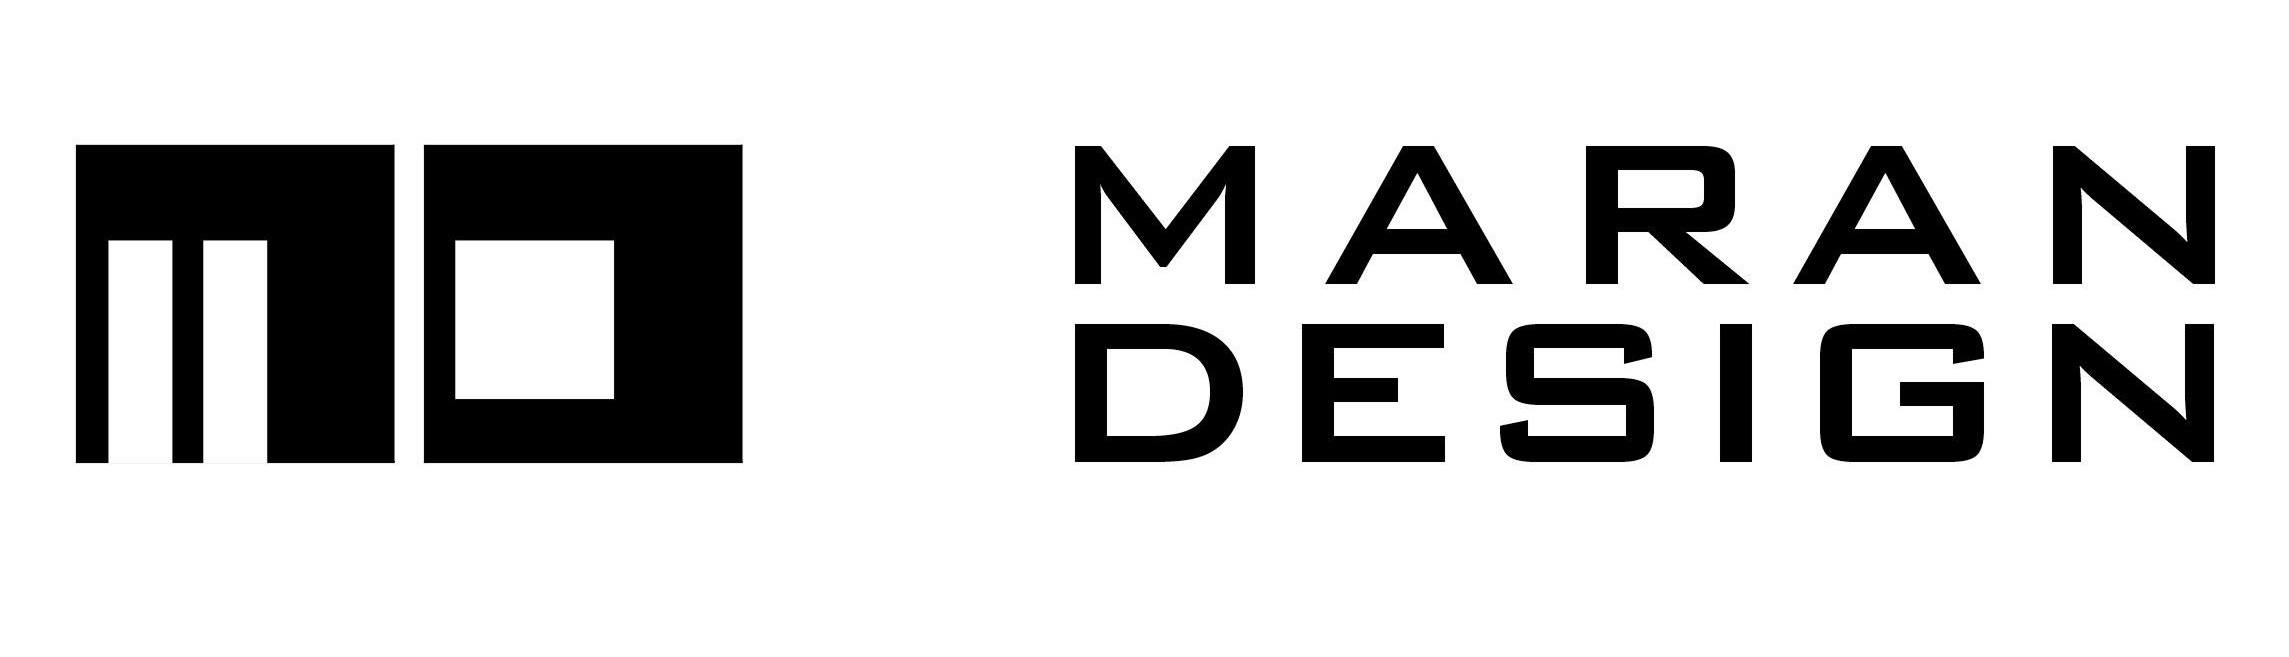 Maran Design|IT Services|Professional Services